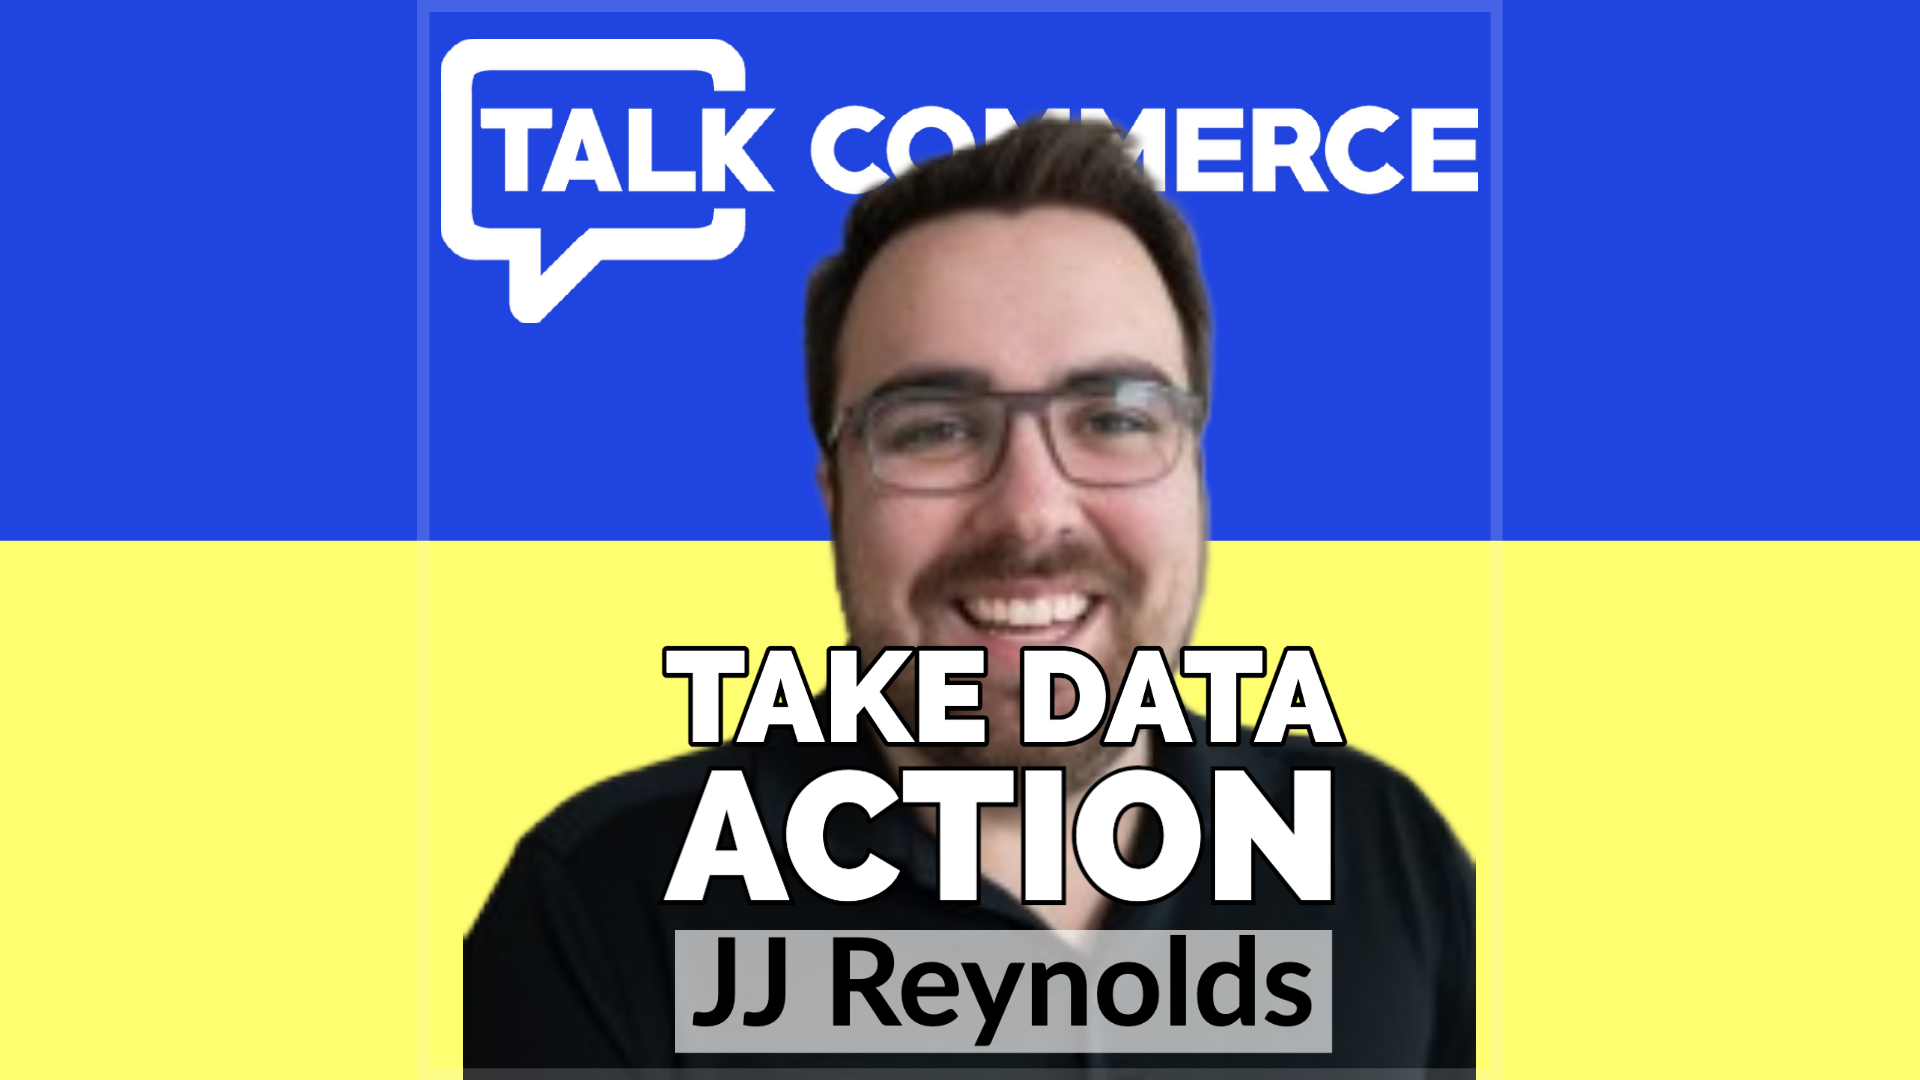 Talk-Commerce JJ Reynolds